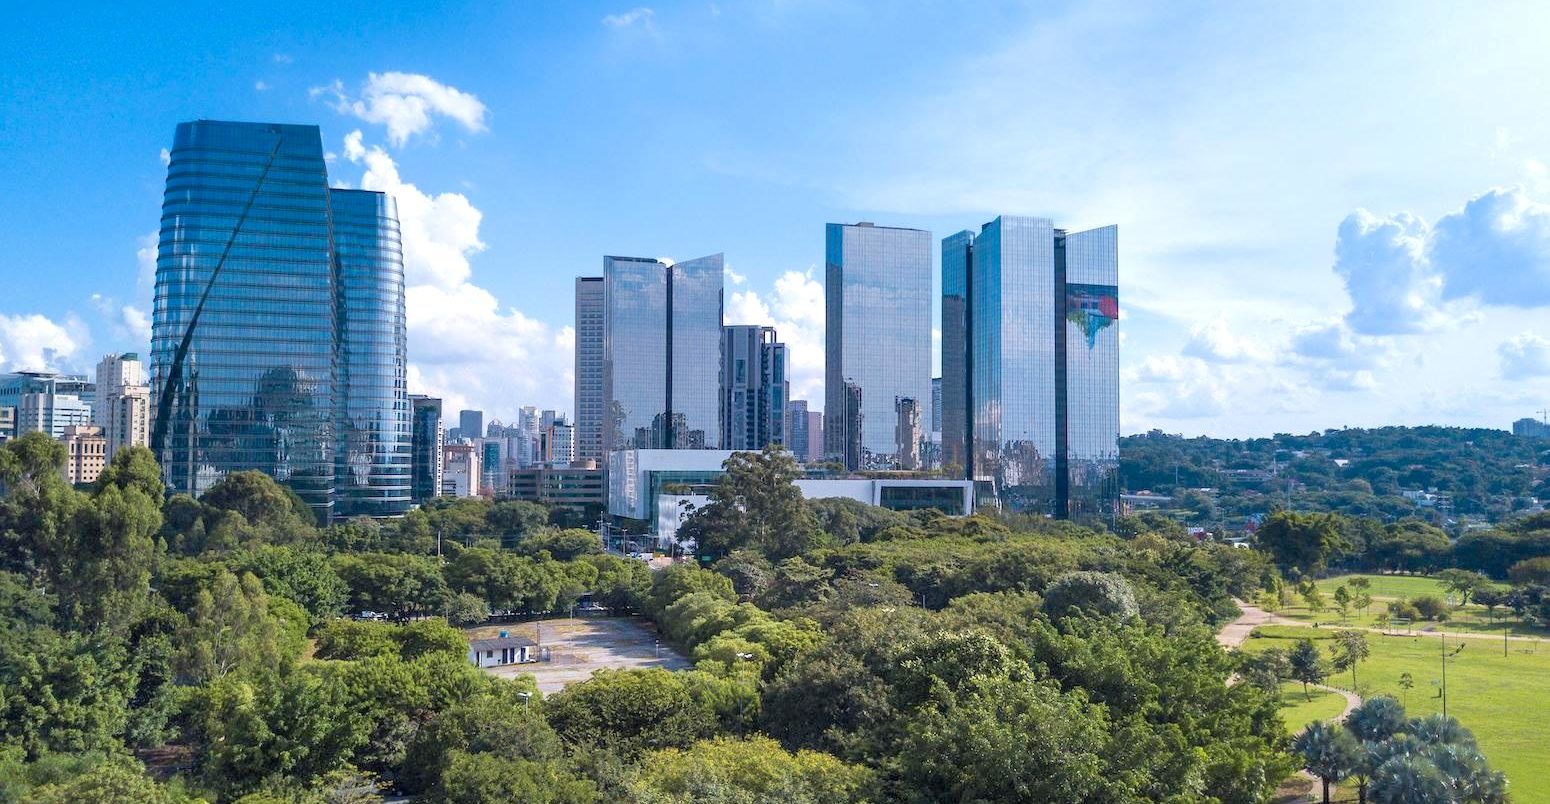 Parque do Povo park and Sao Paulo city skyline on a sunny day. Credit: Paralaxis / Alamy Stock Photo.